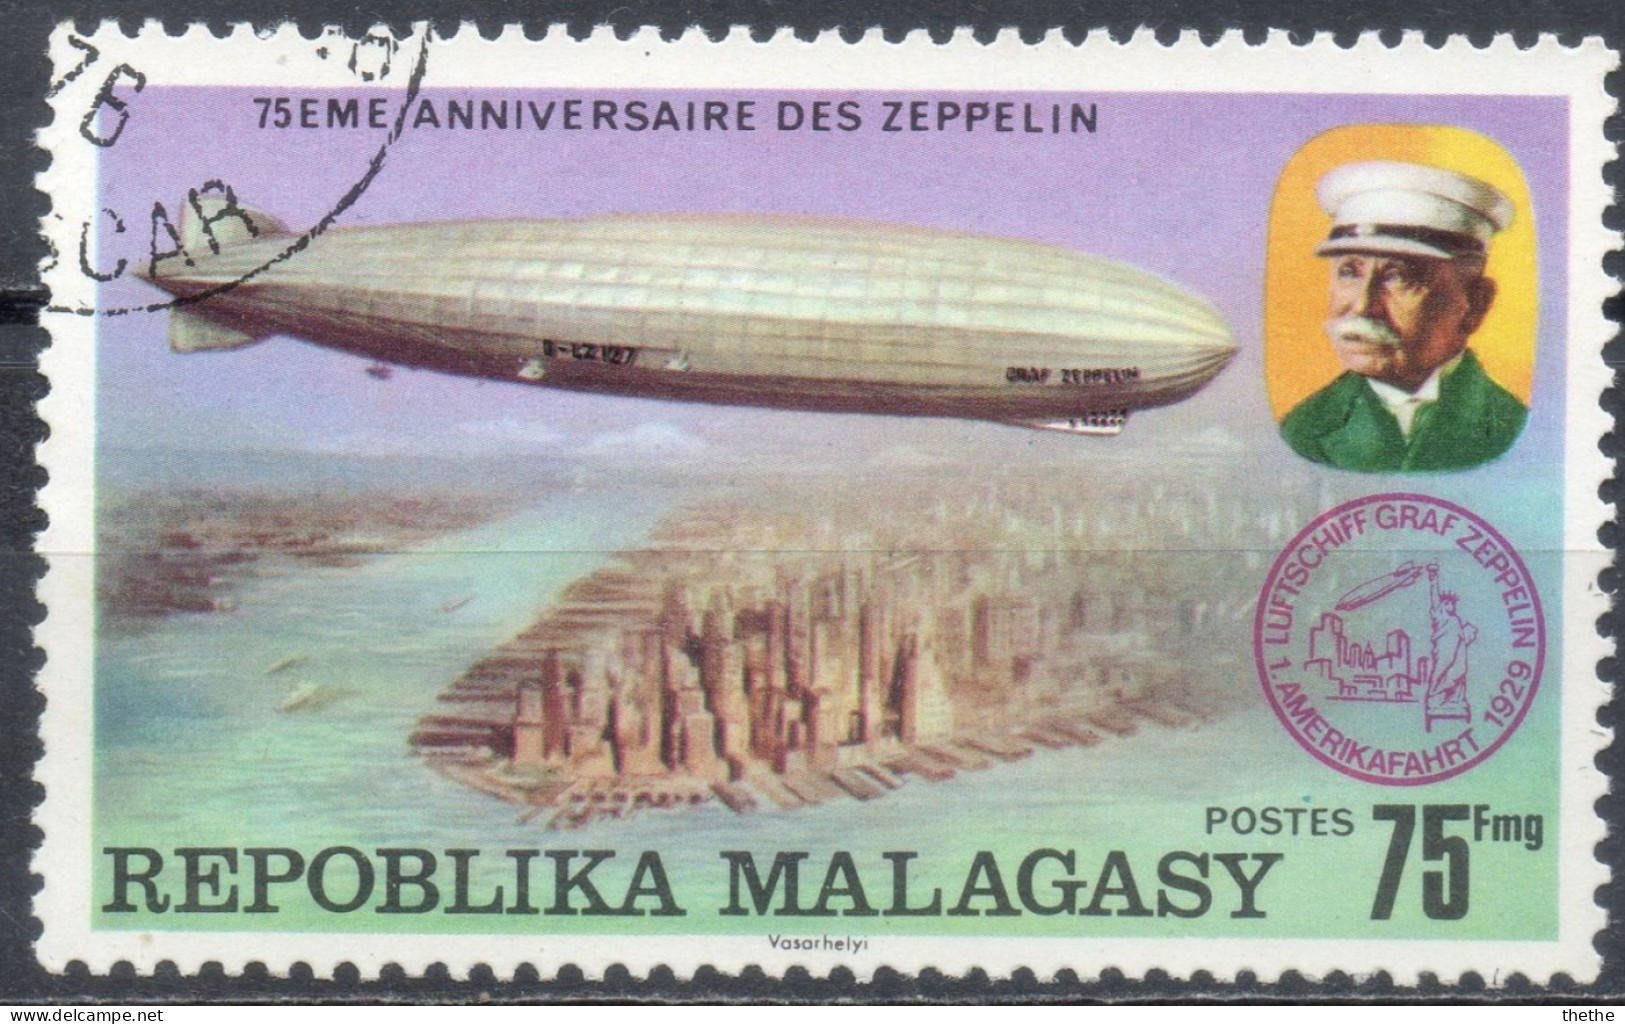 MADAGASCAR - Dirigeable LZ -127 "Graf Zeppelin" - Zeppeline